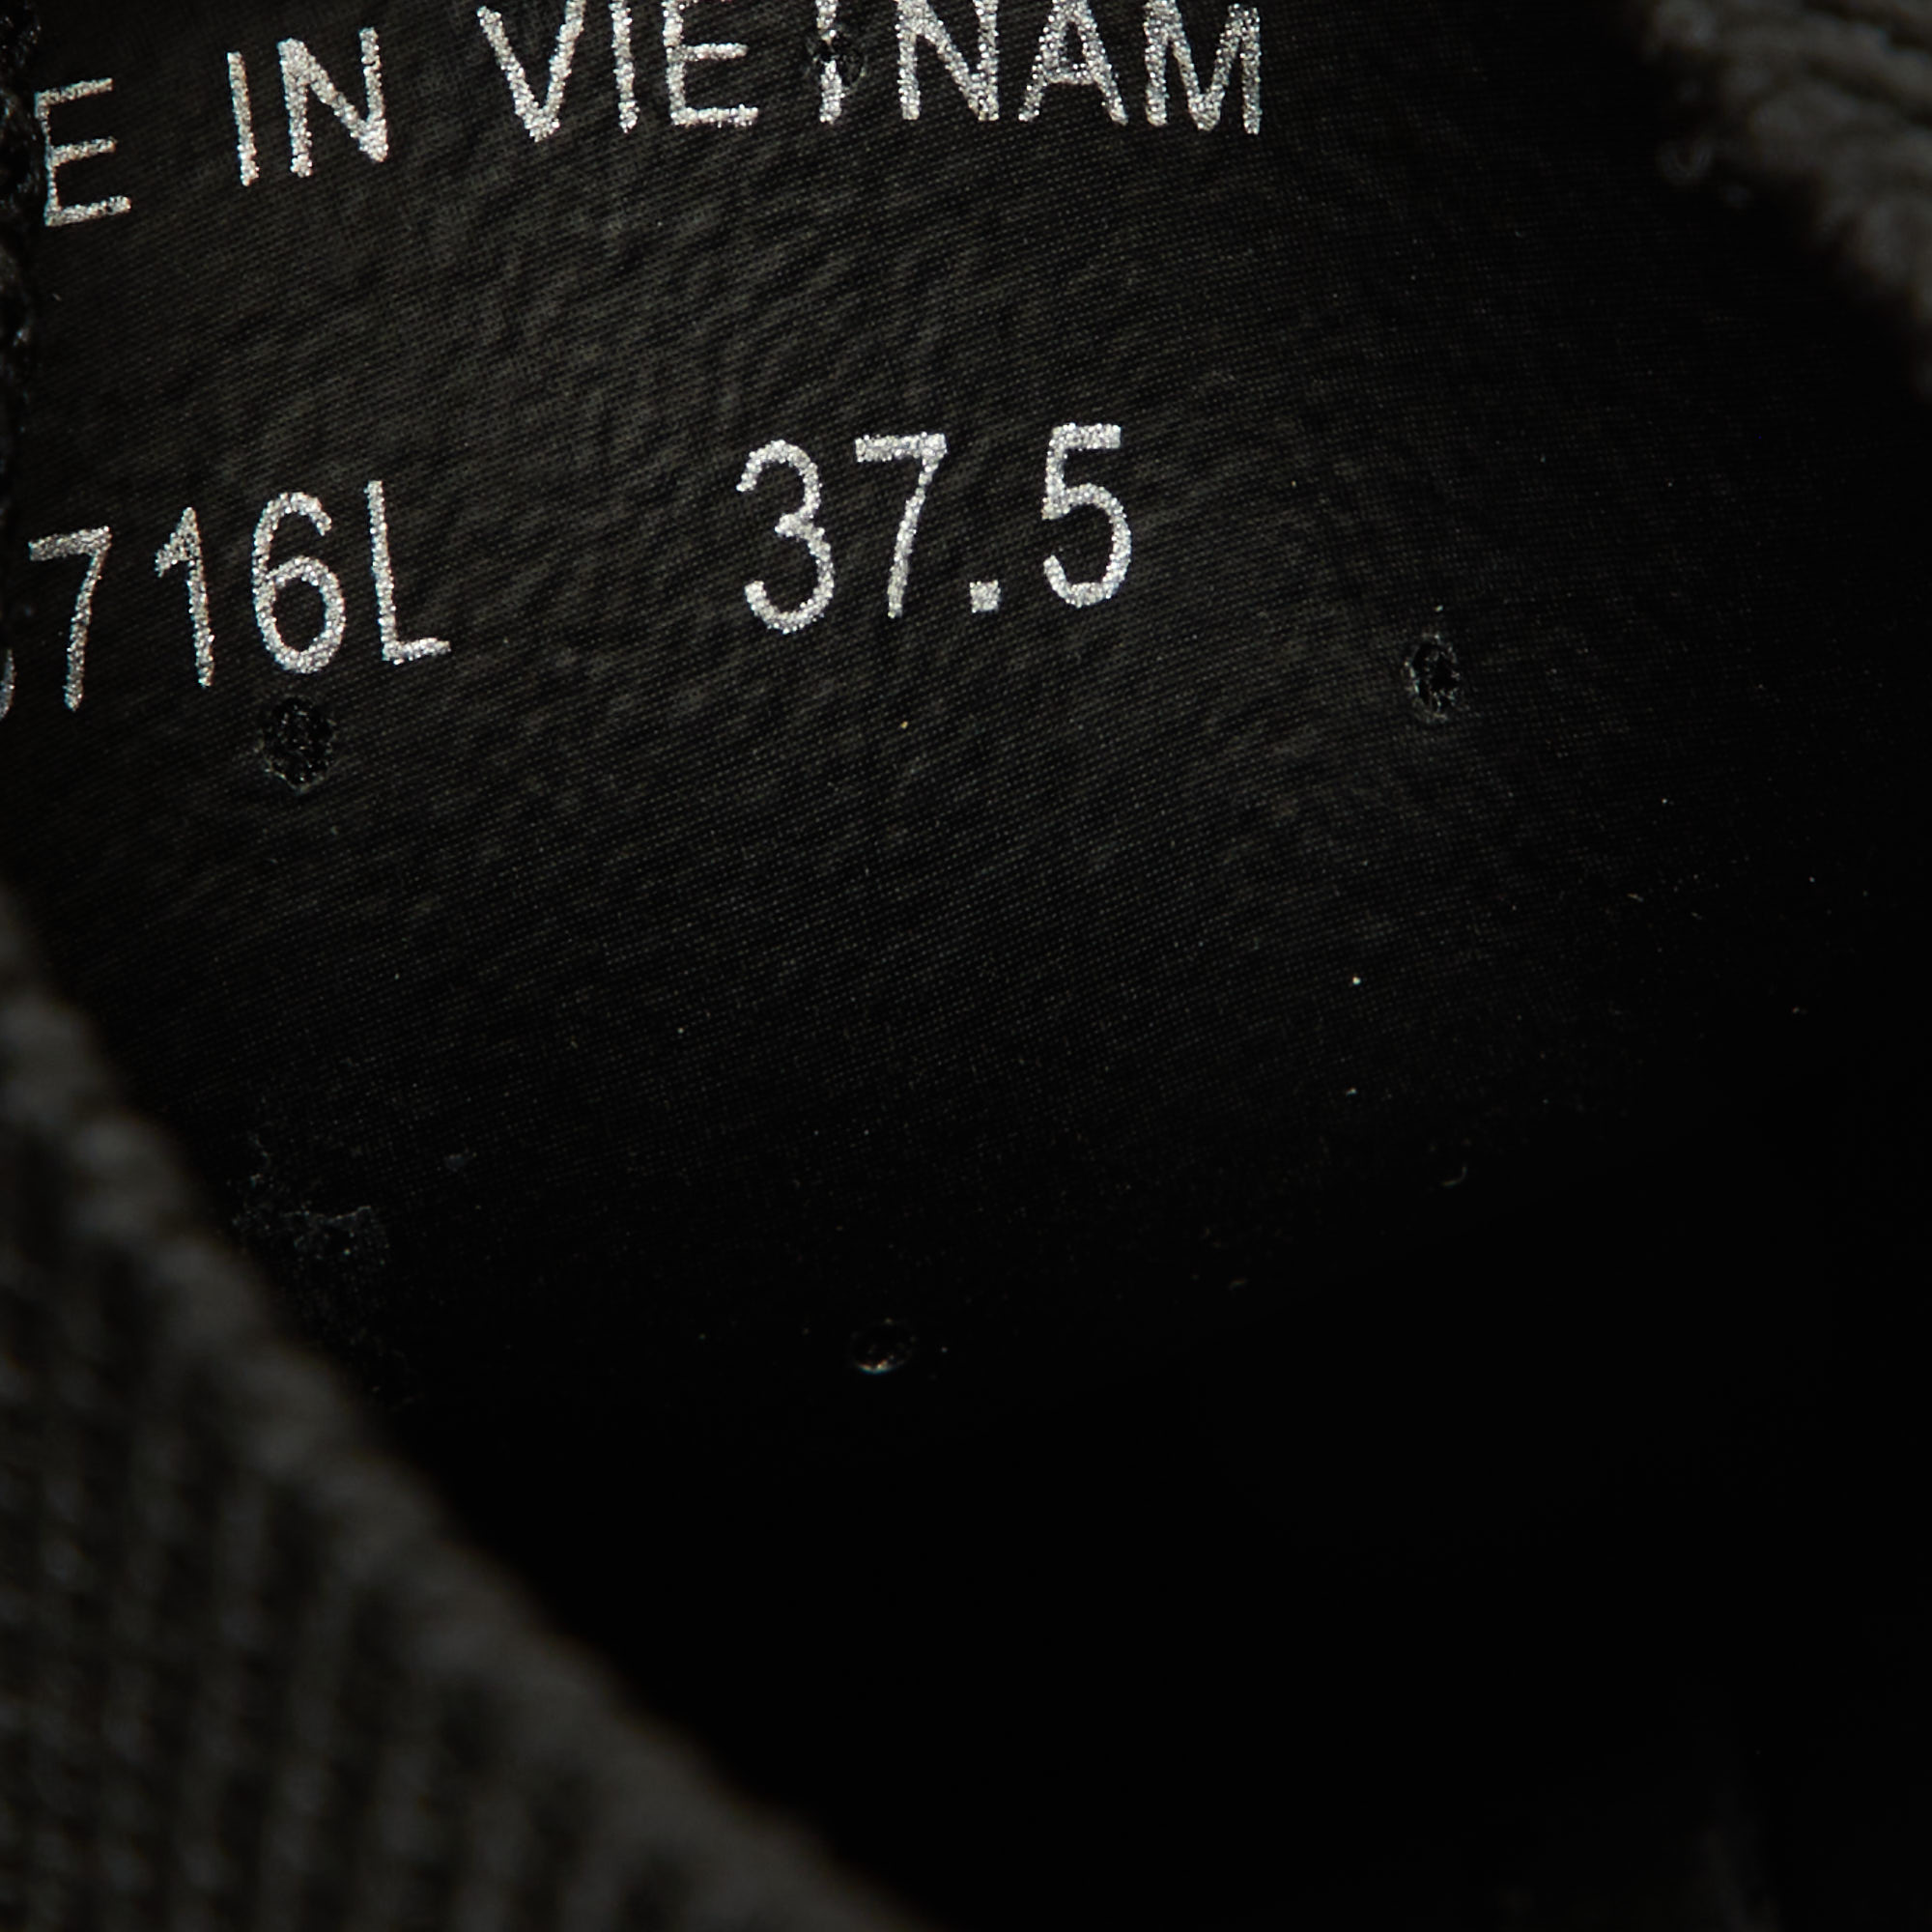 Prada Black Knit Fabric Slip On Sneakers Size 37.5